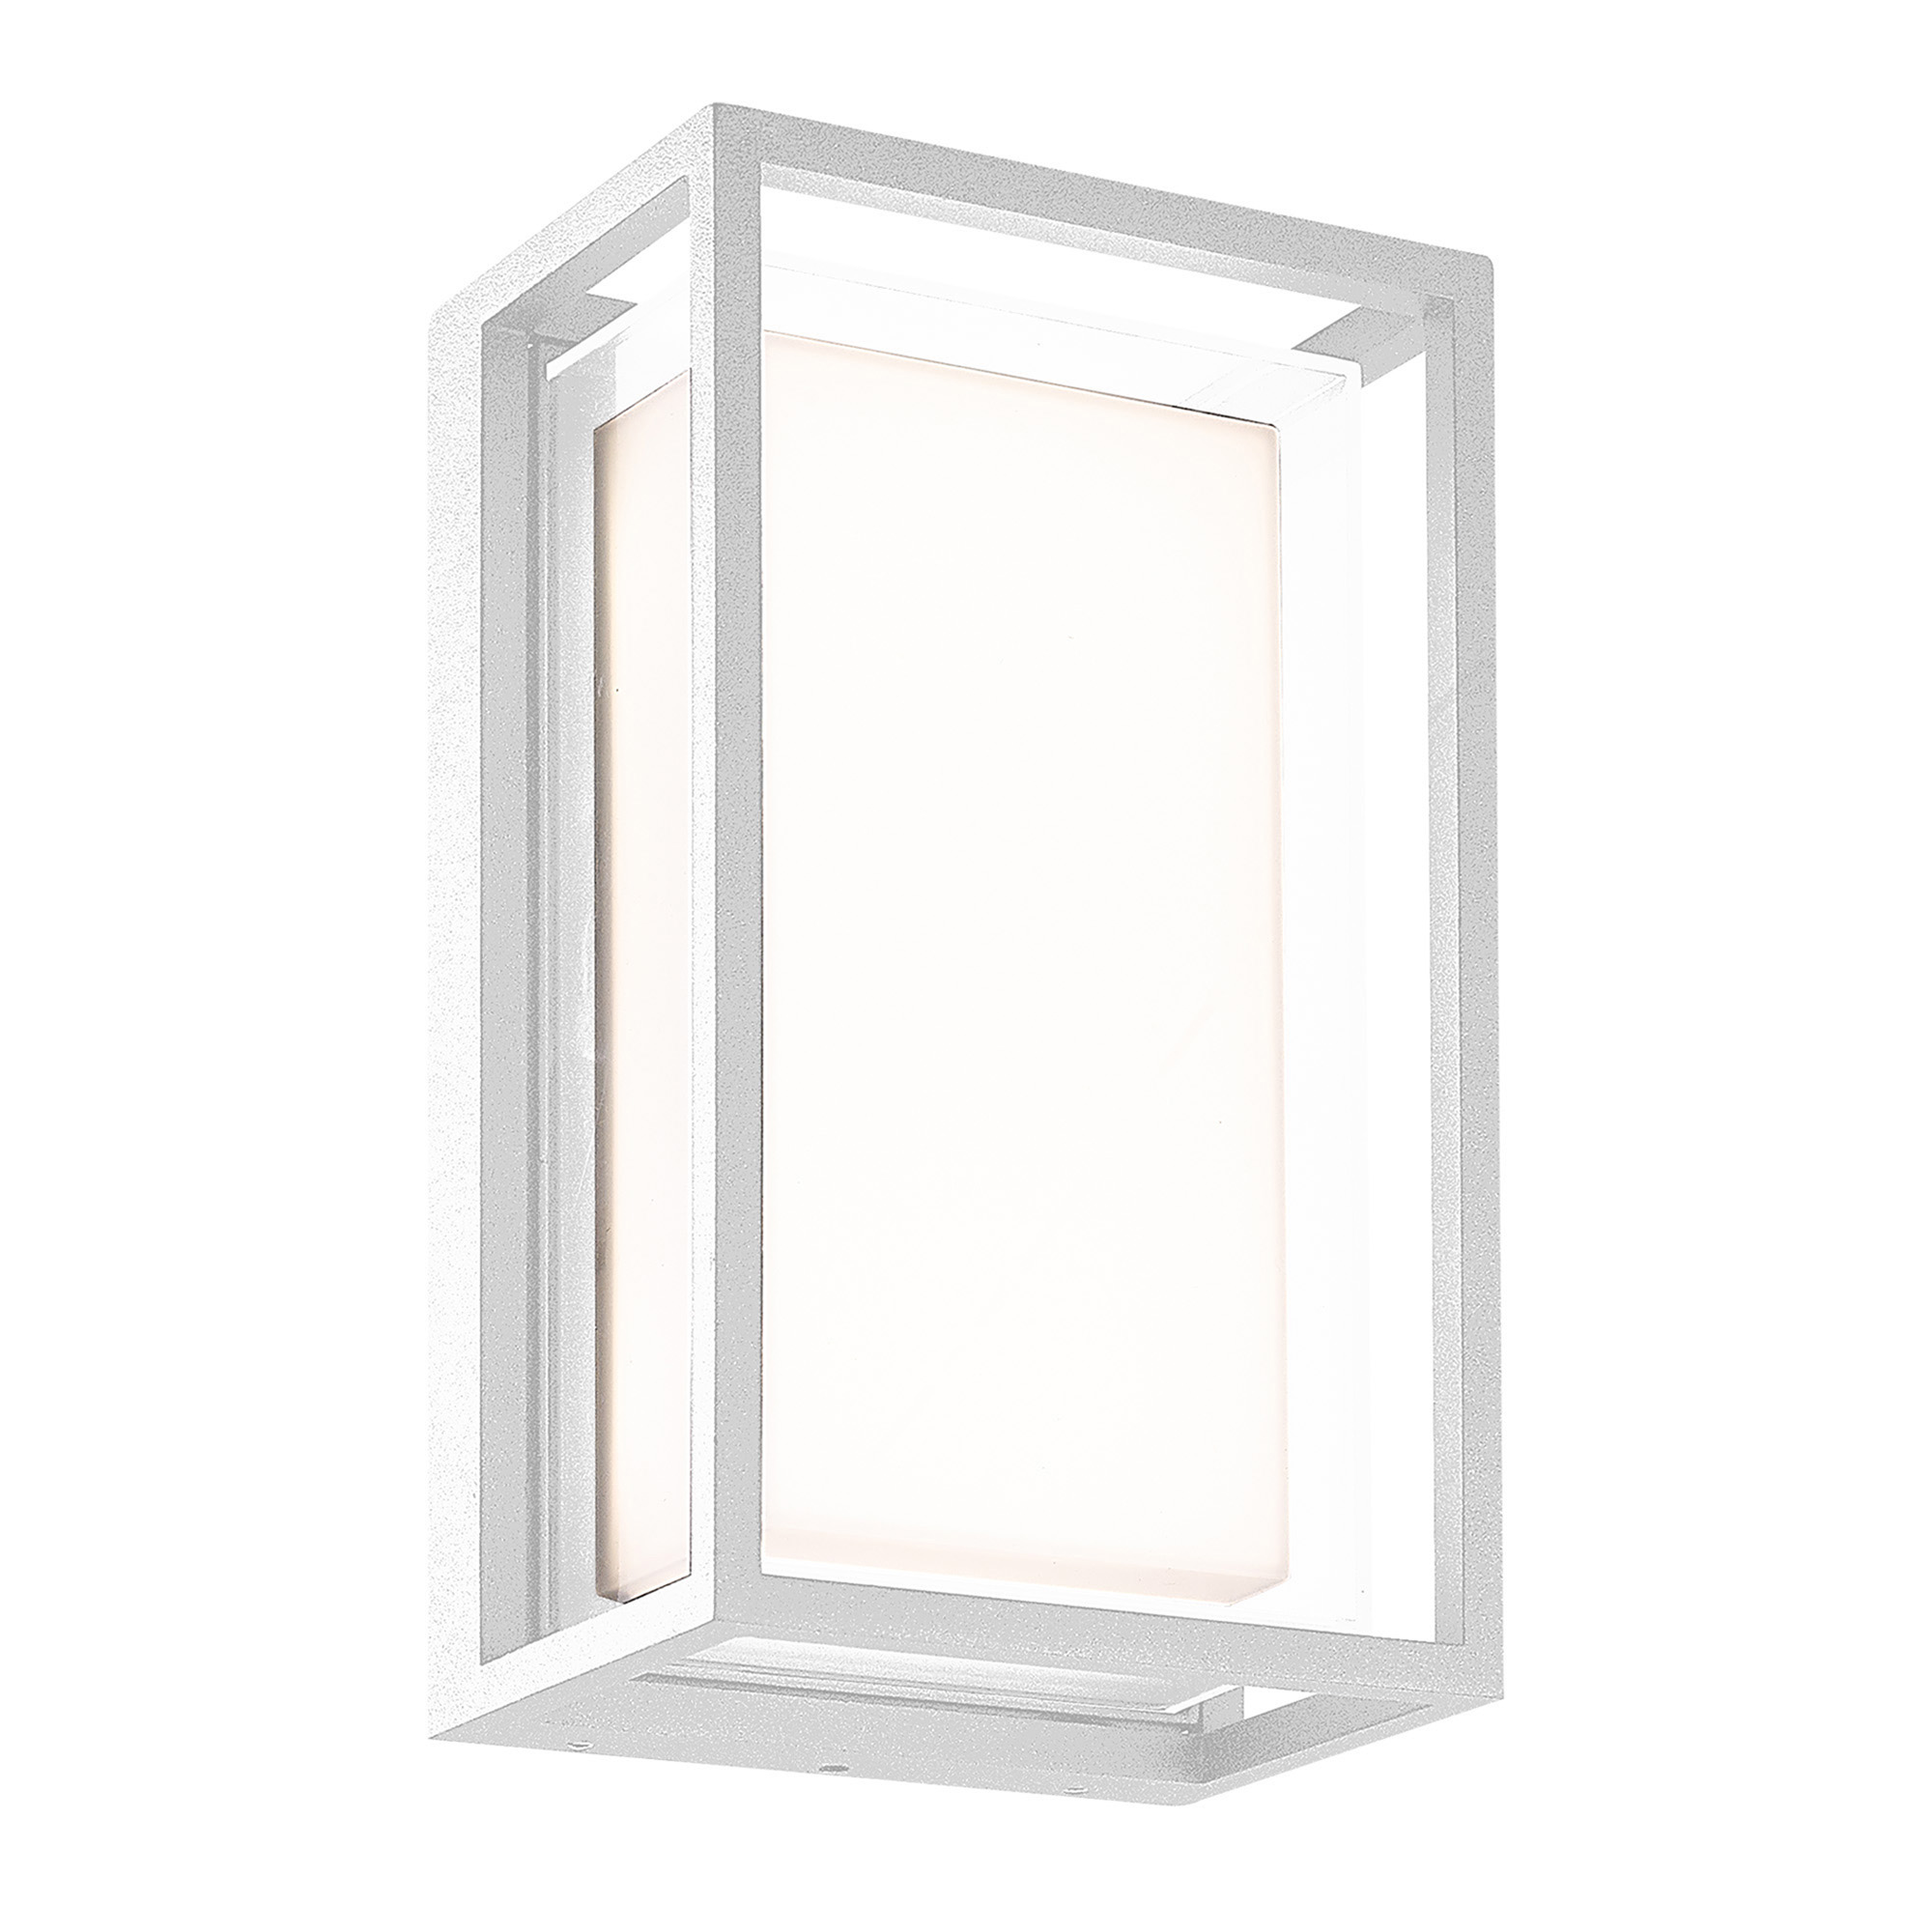 M7063  Chamonix Rectangular Ceiling/Wall Light 9W LED IP65 Outdoor White